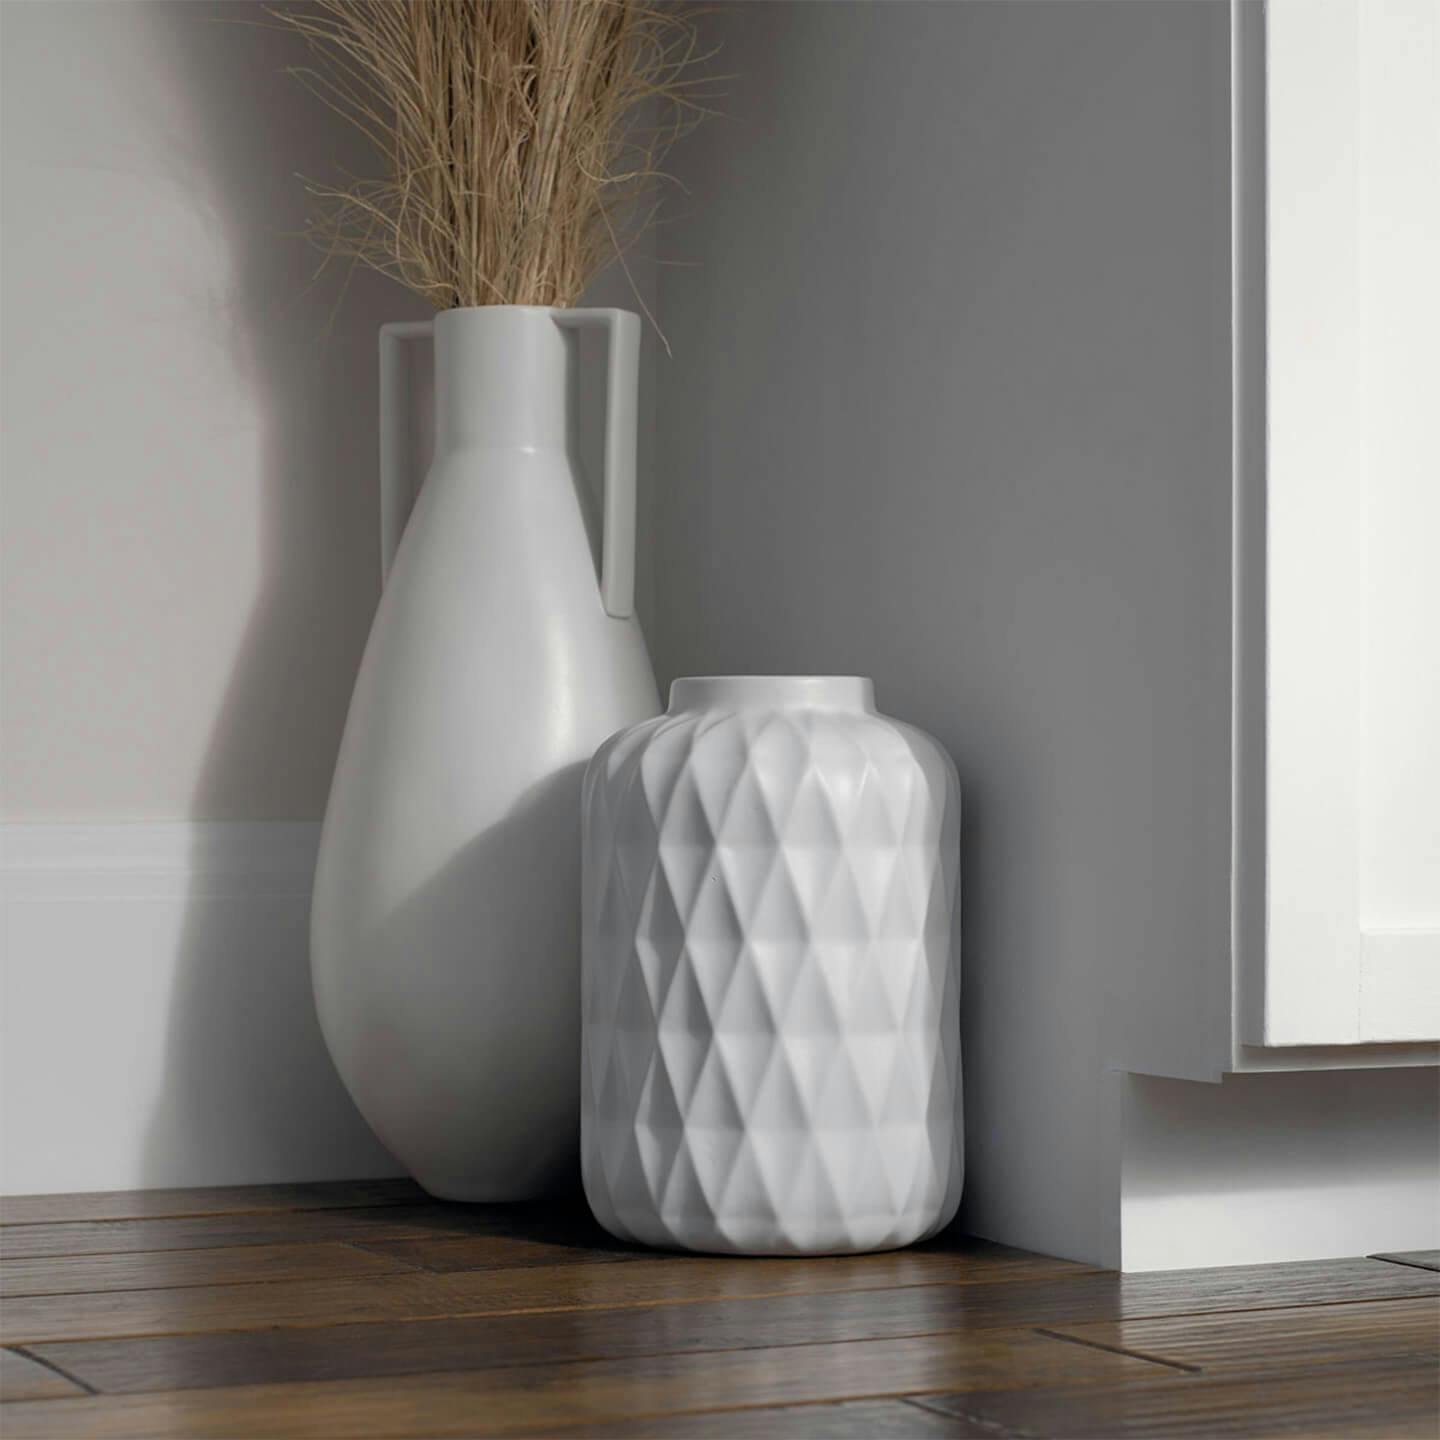 Vases in cool/pure white light, 3000 K